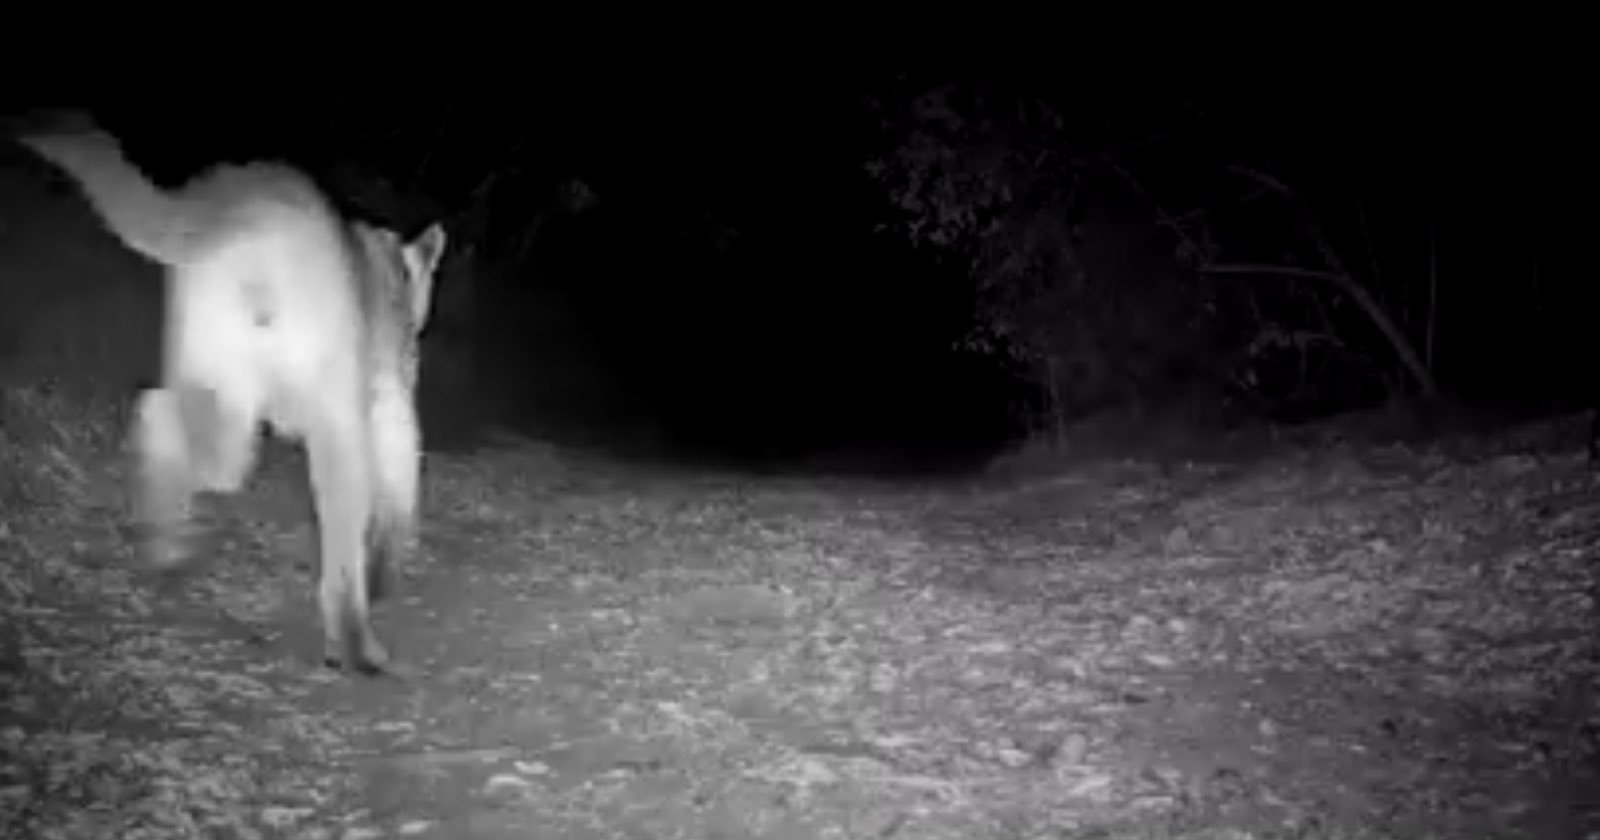  trail camera captures cougar stalking coyote audio reveals 